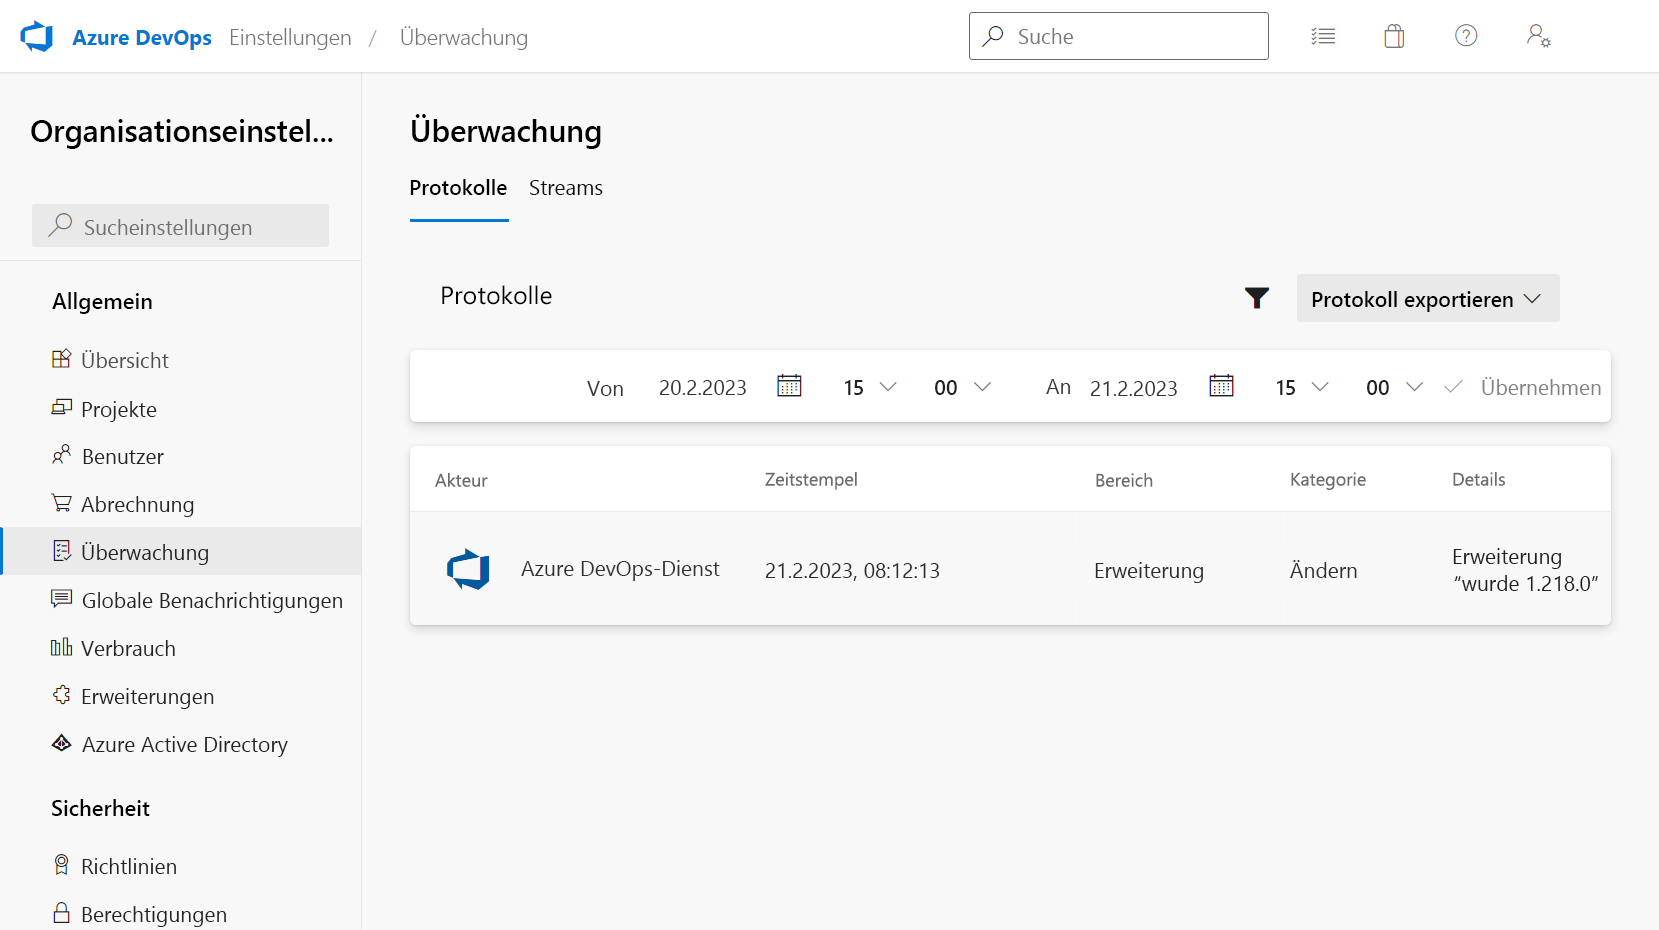 Screenshot of Azure DevOps showing the auditing log under the organization settings.